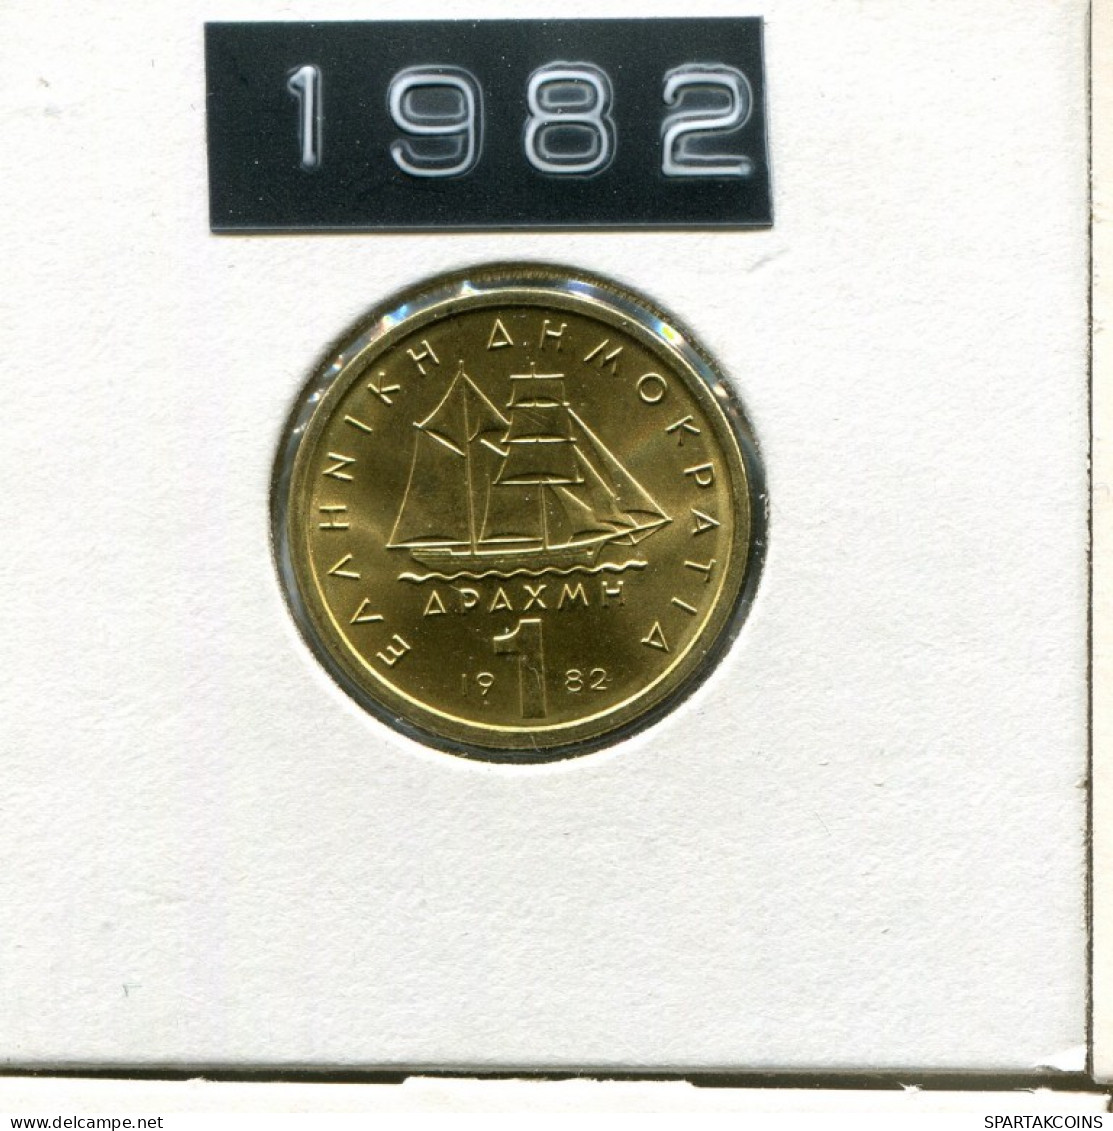 1 DRACHMA 1982 GREECE Coin #AK356.U.A - Greece